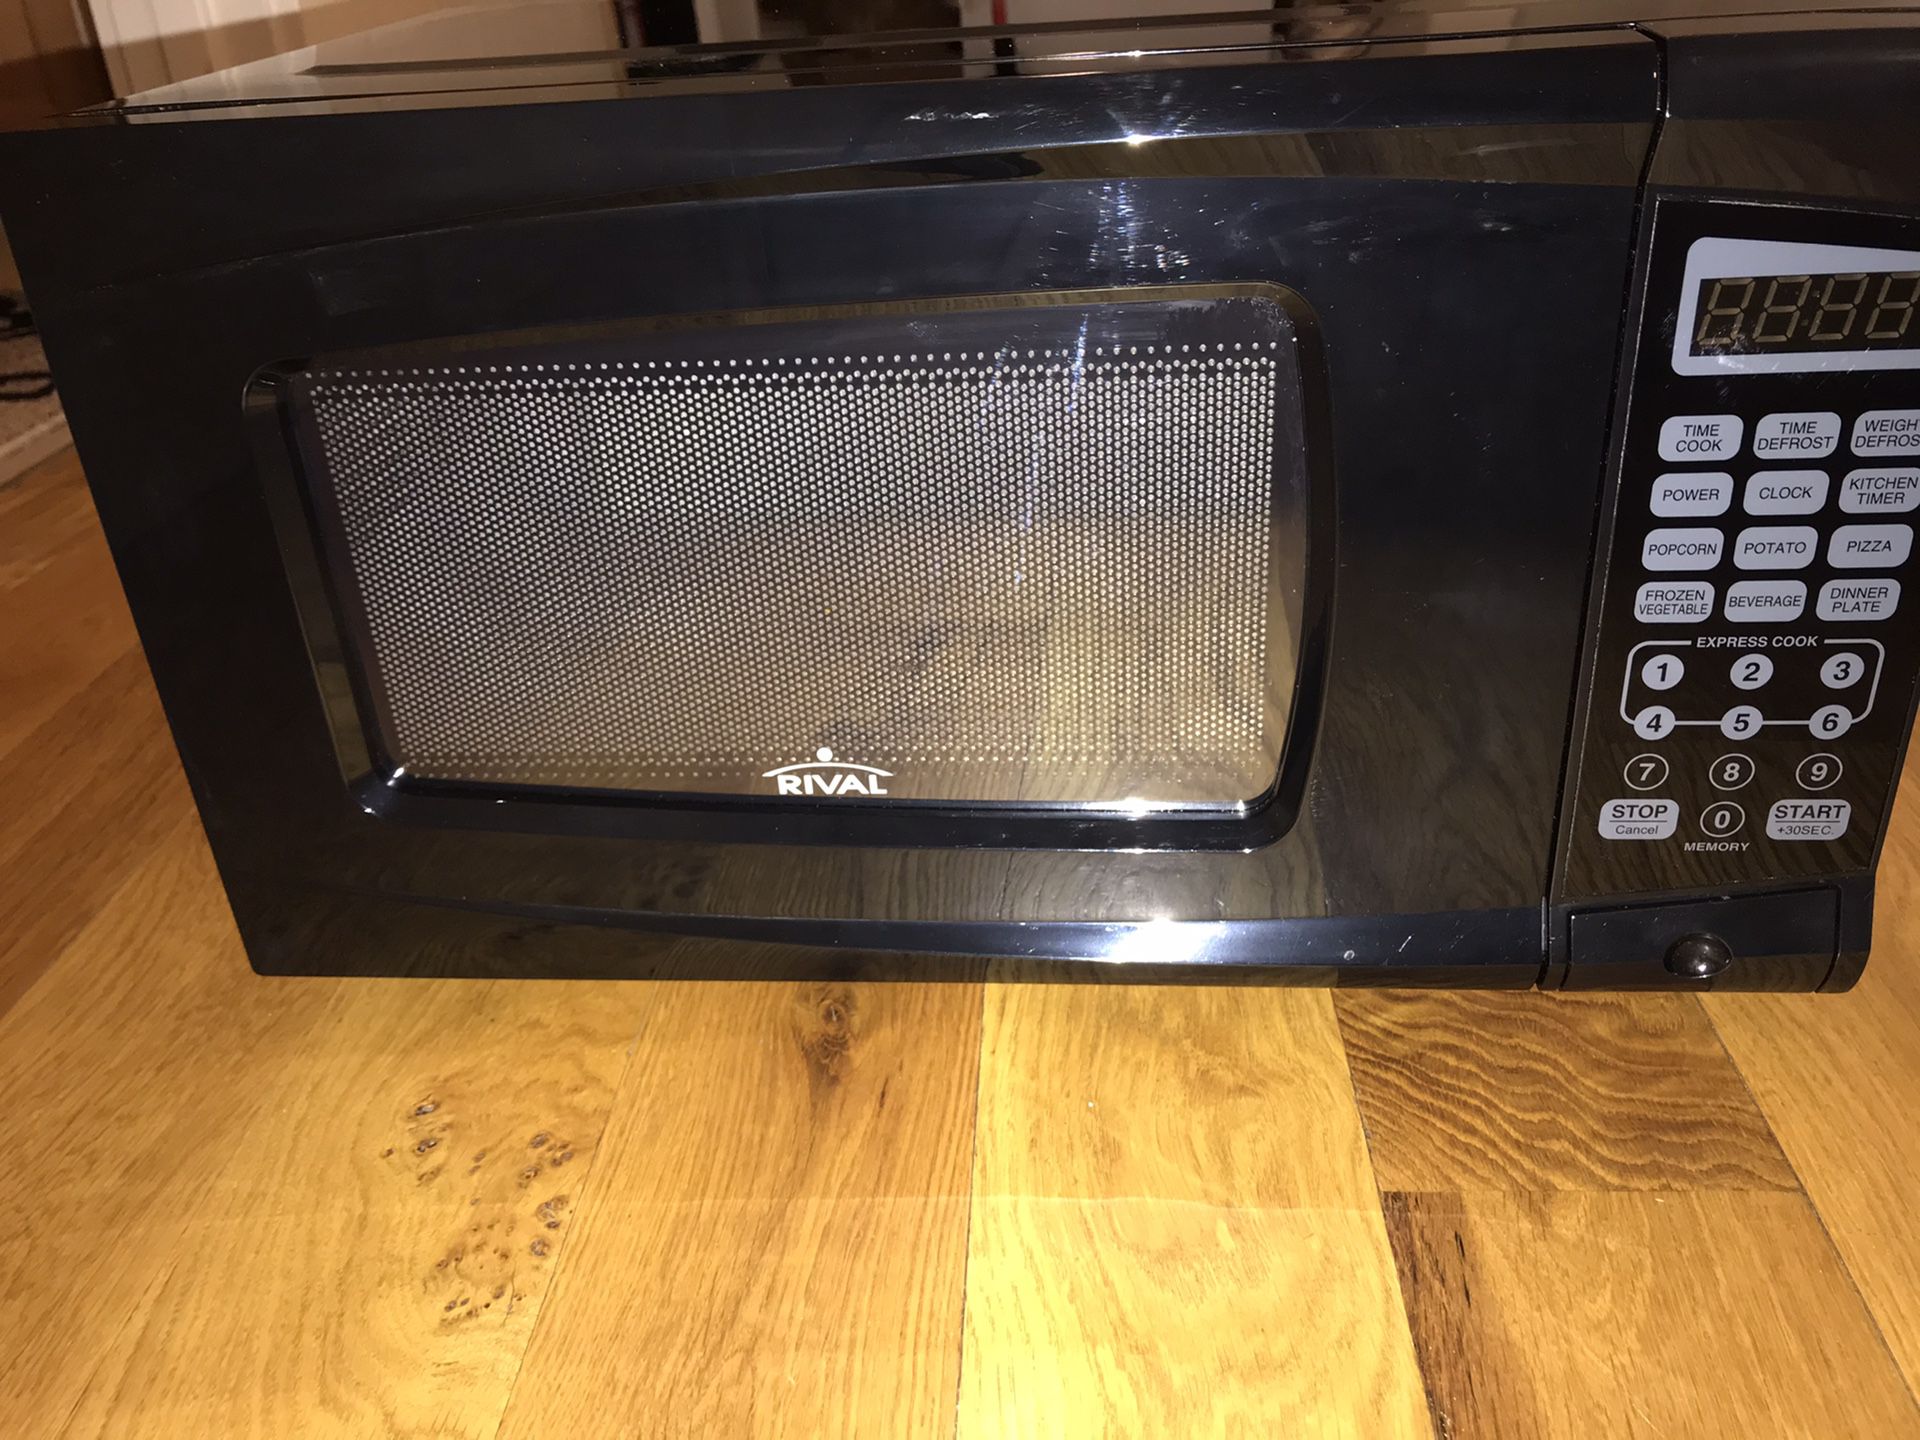 Mini microwave oven, brand Rival